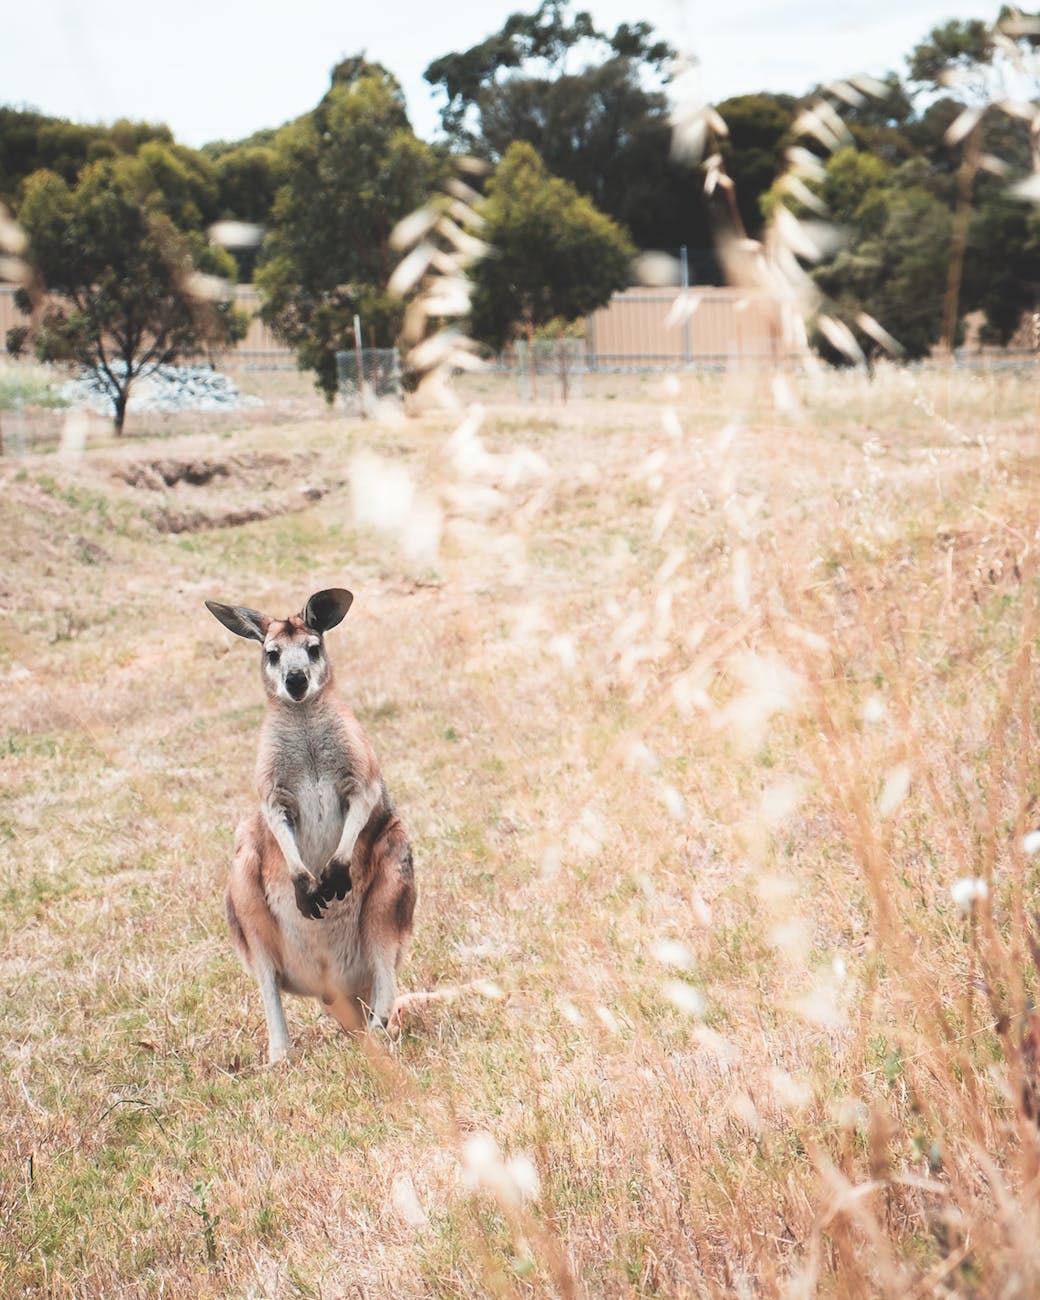 kangaroo on grassy meadow with green trees